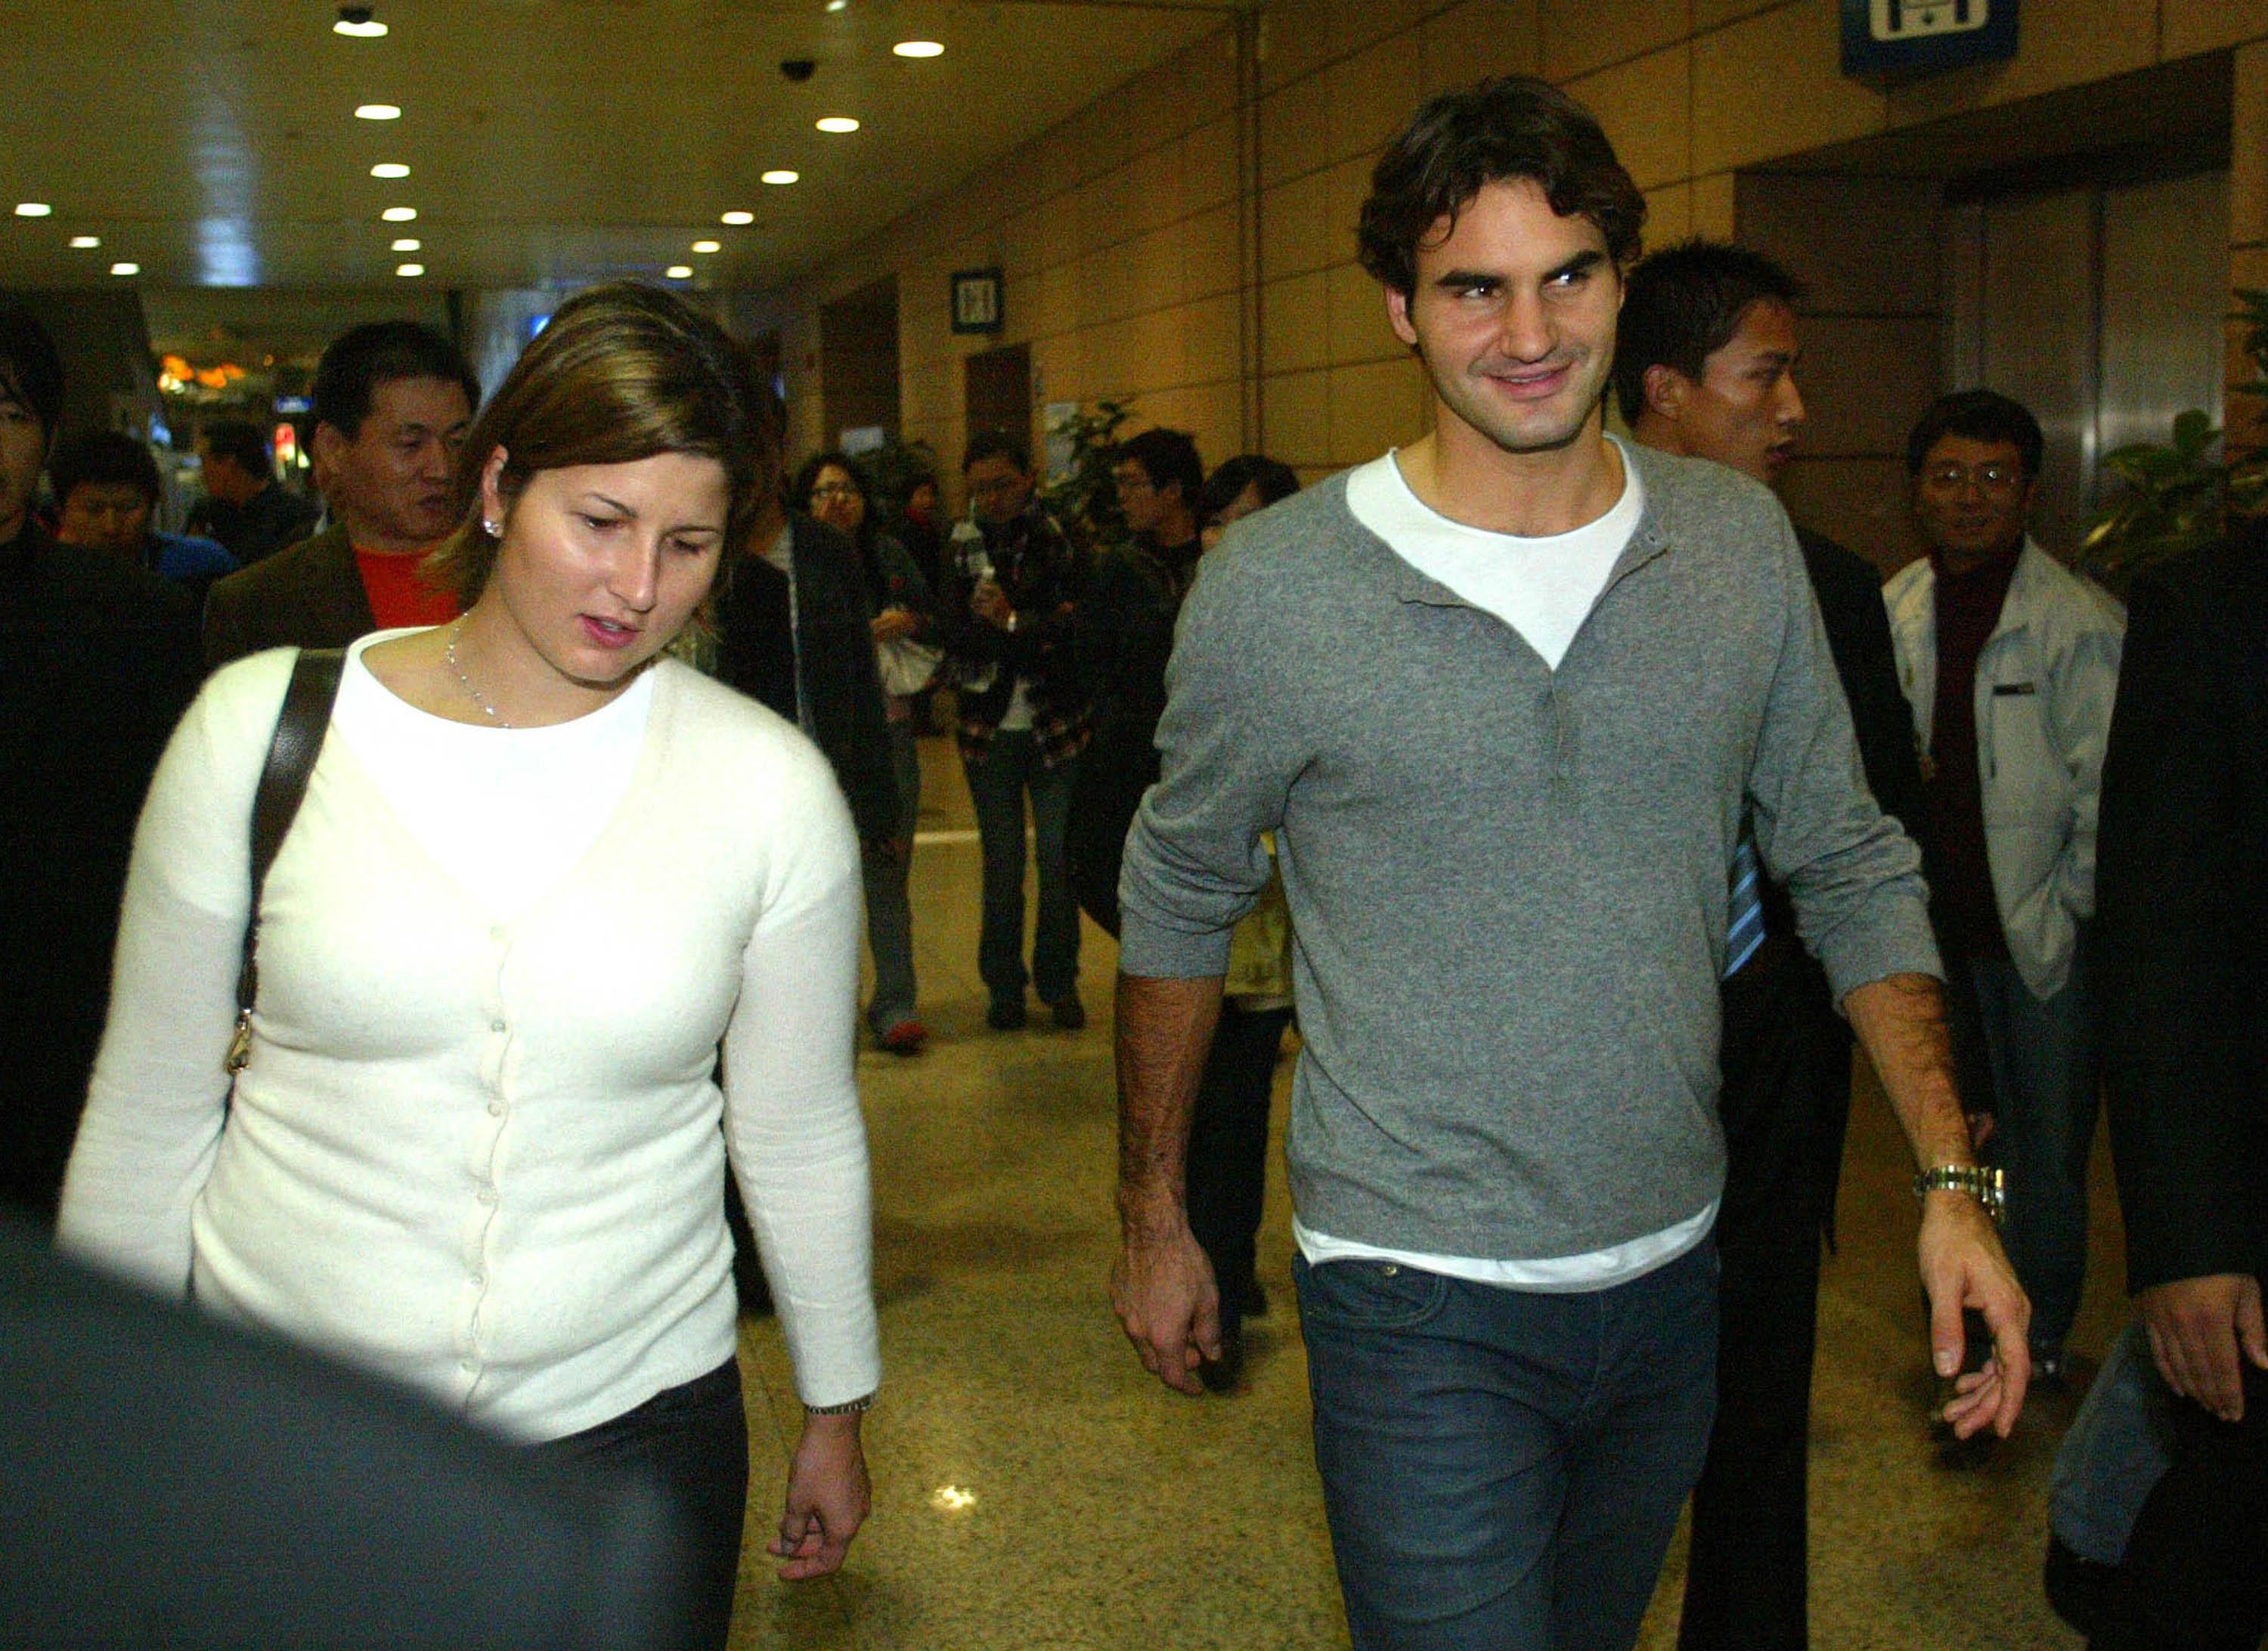 Deuces wild for tennis ace Roger Federer & wife Mirka | New York Gossip Gal | by Roz